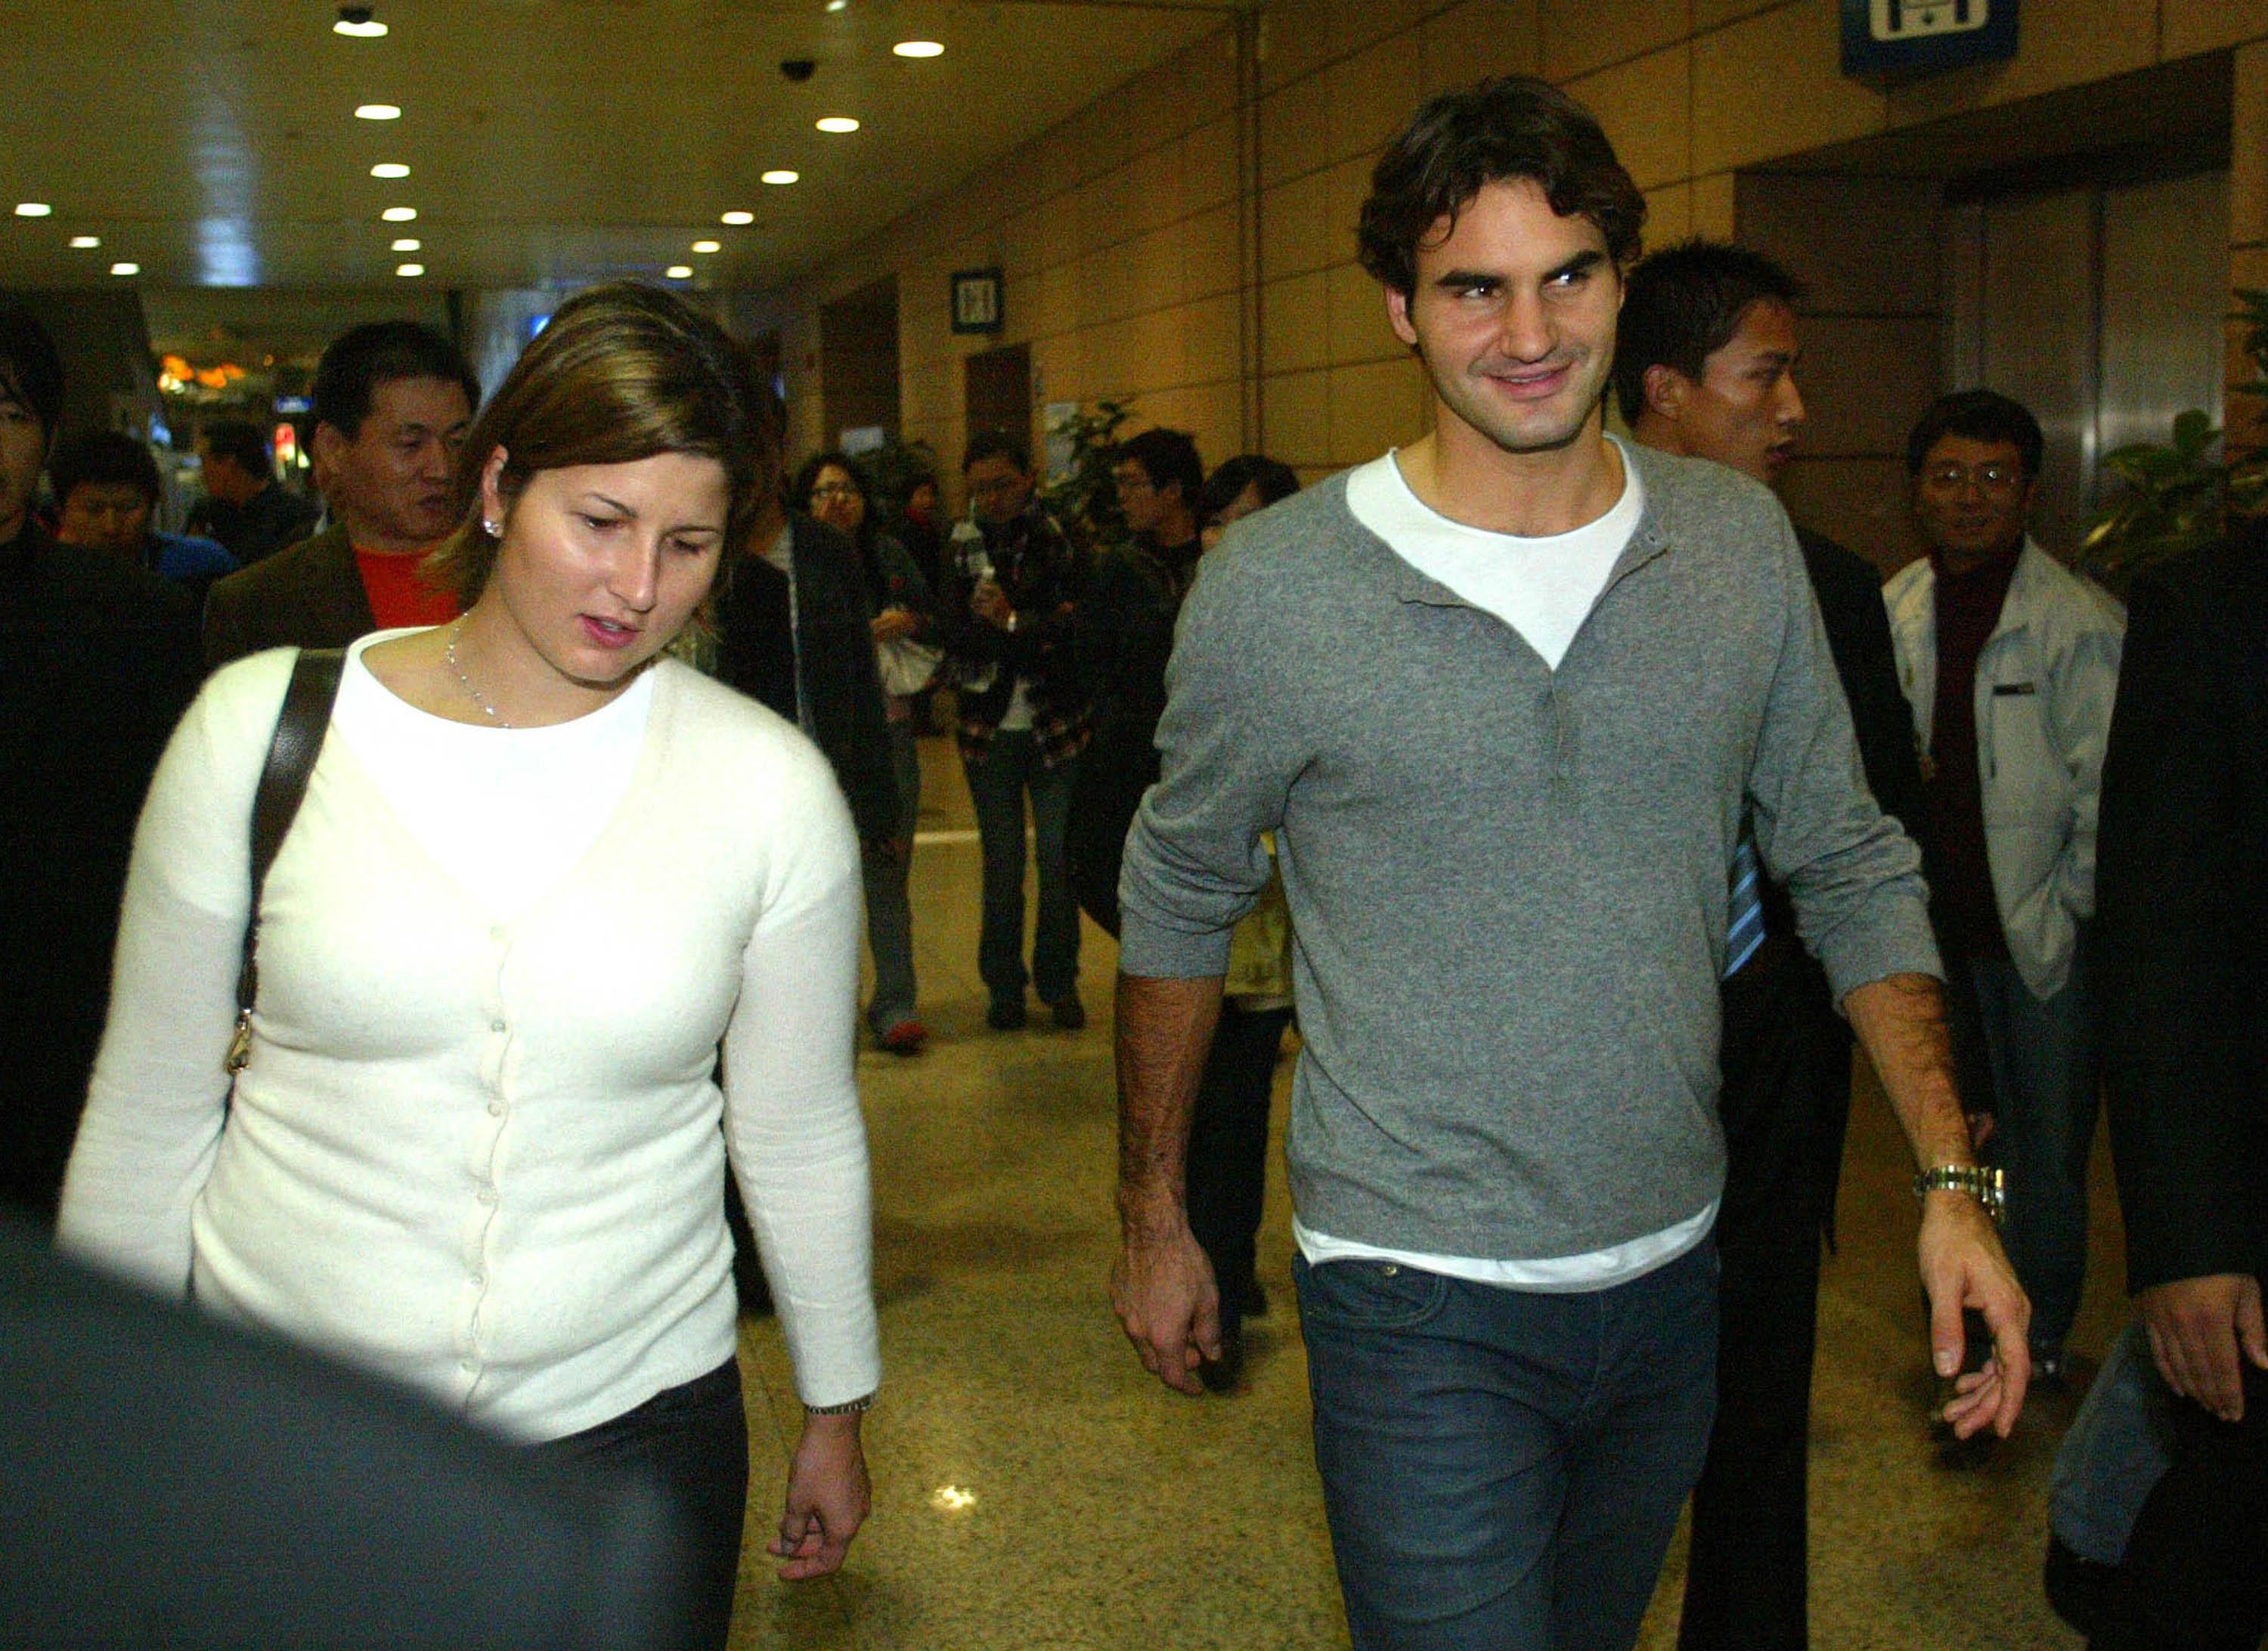 Deuces wild for tennis ace Roger Federer & wife Mirka | New York Gossip Gal | by Roz